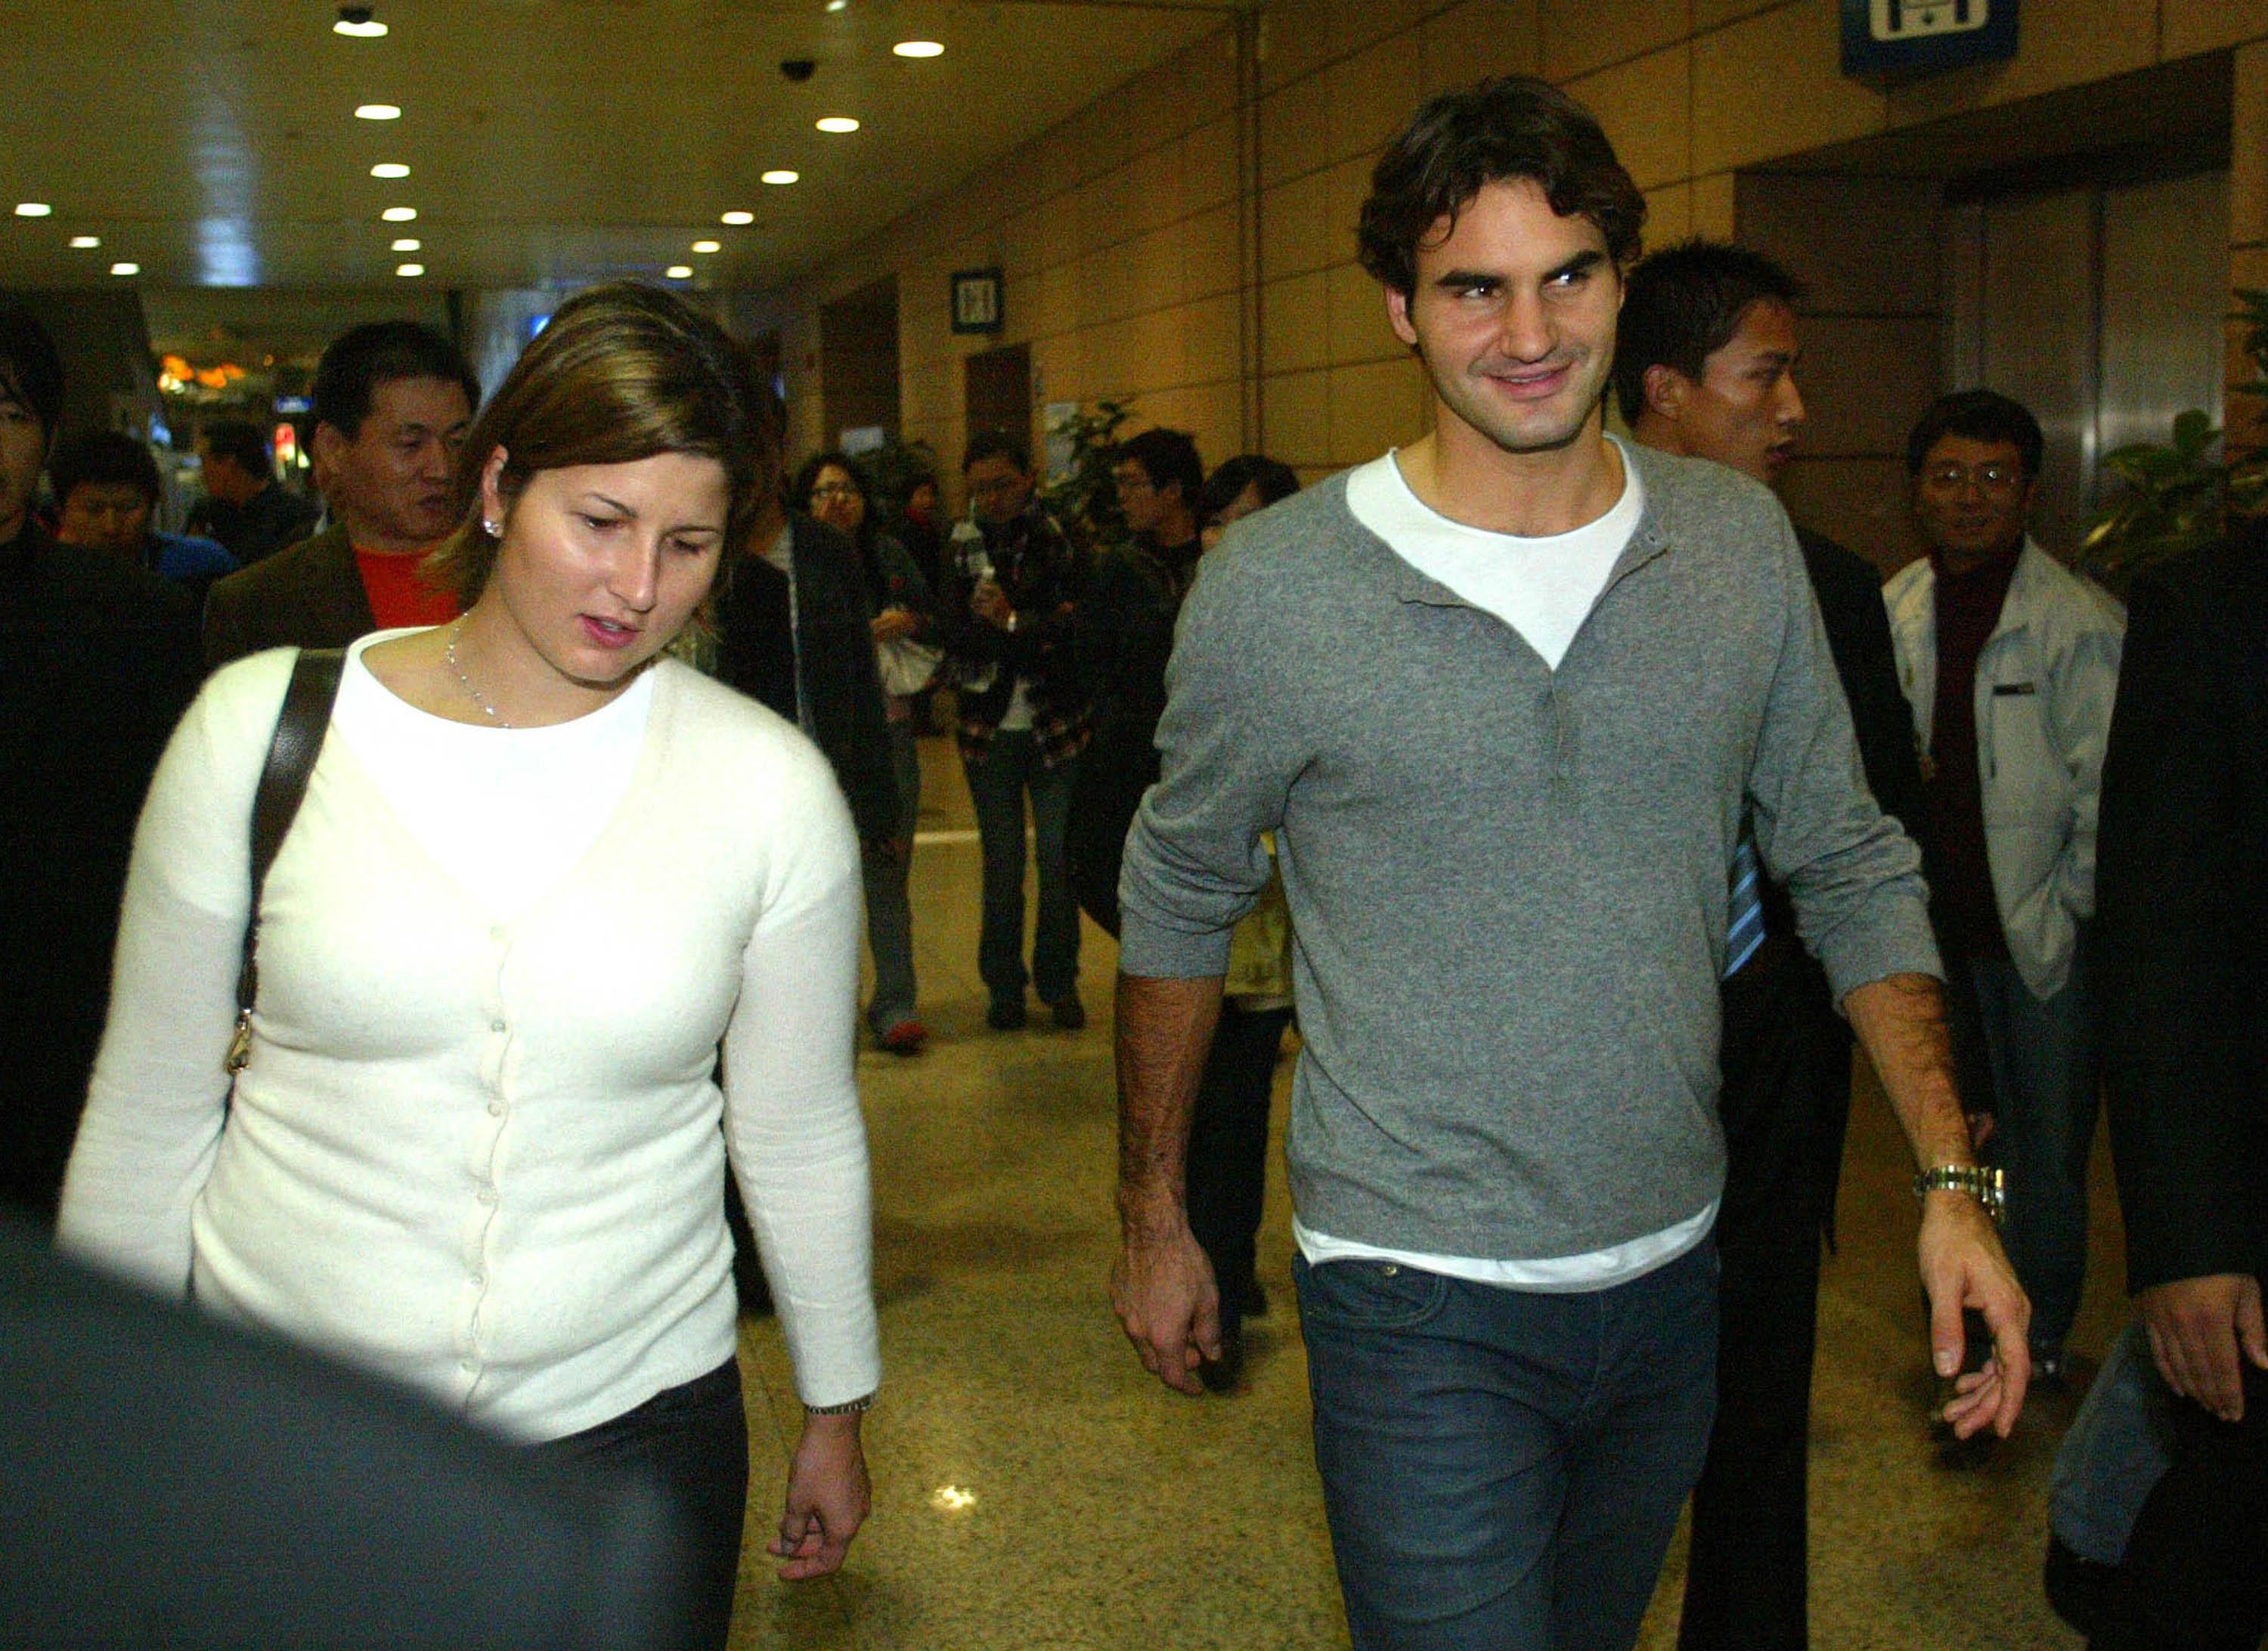 Deuces wild for tennis ace Roger Federer & wife Mirka | New York Gossip Gal | by Roz